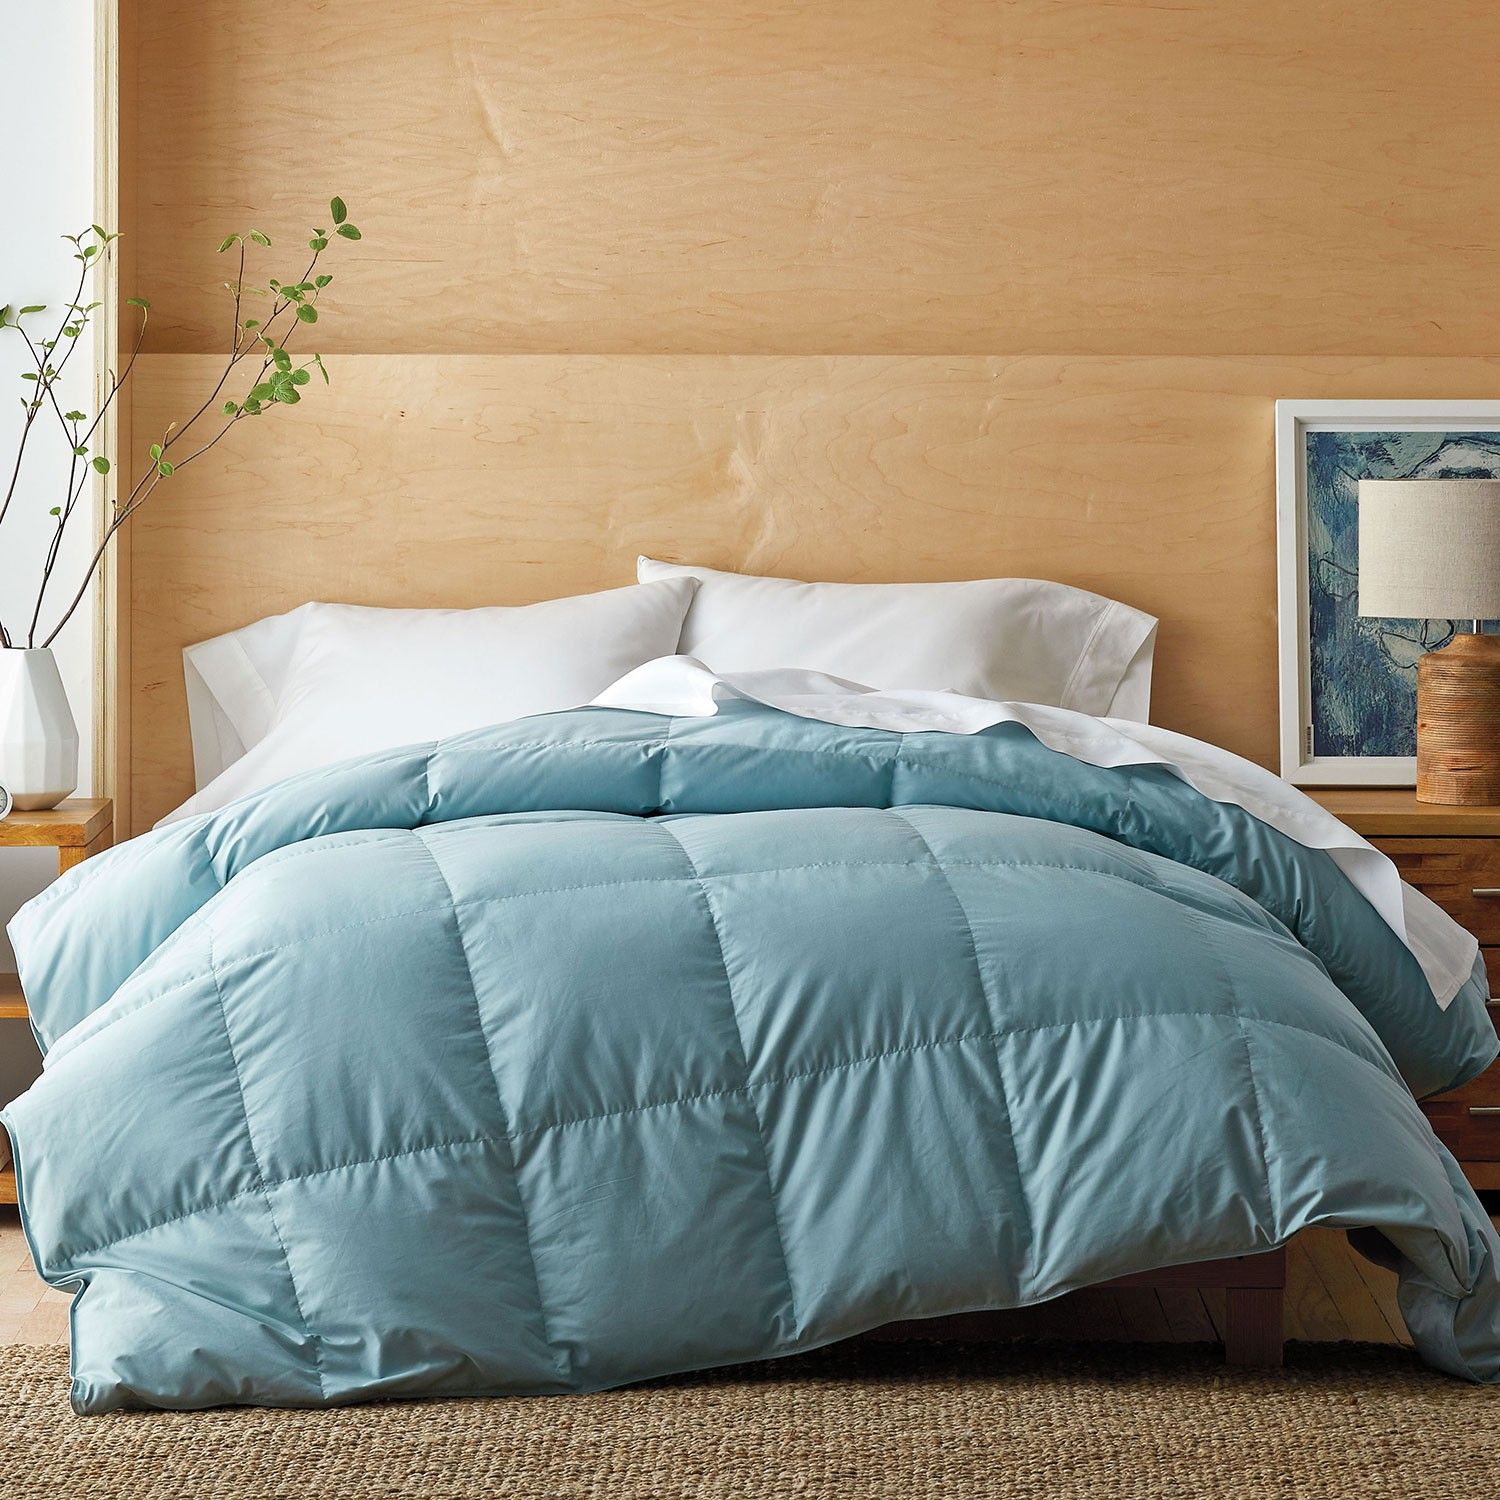 Reviews For Top Comforter Set Brands, Comforters For Queen Size Beds